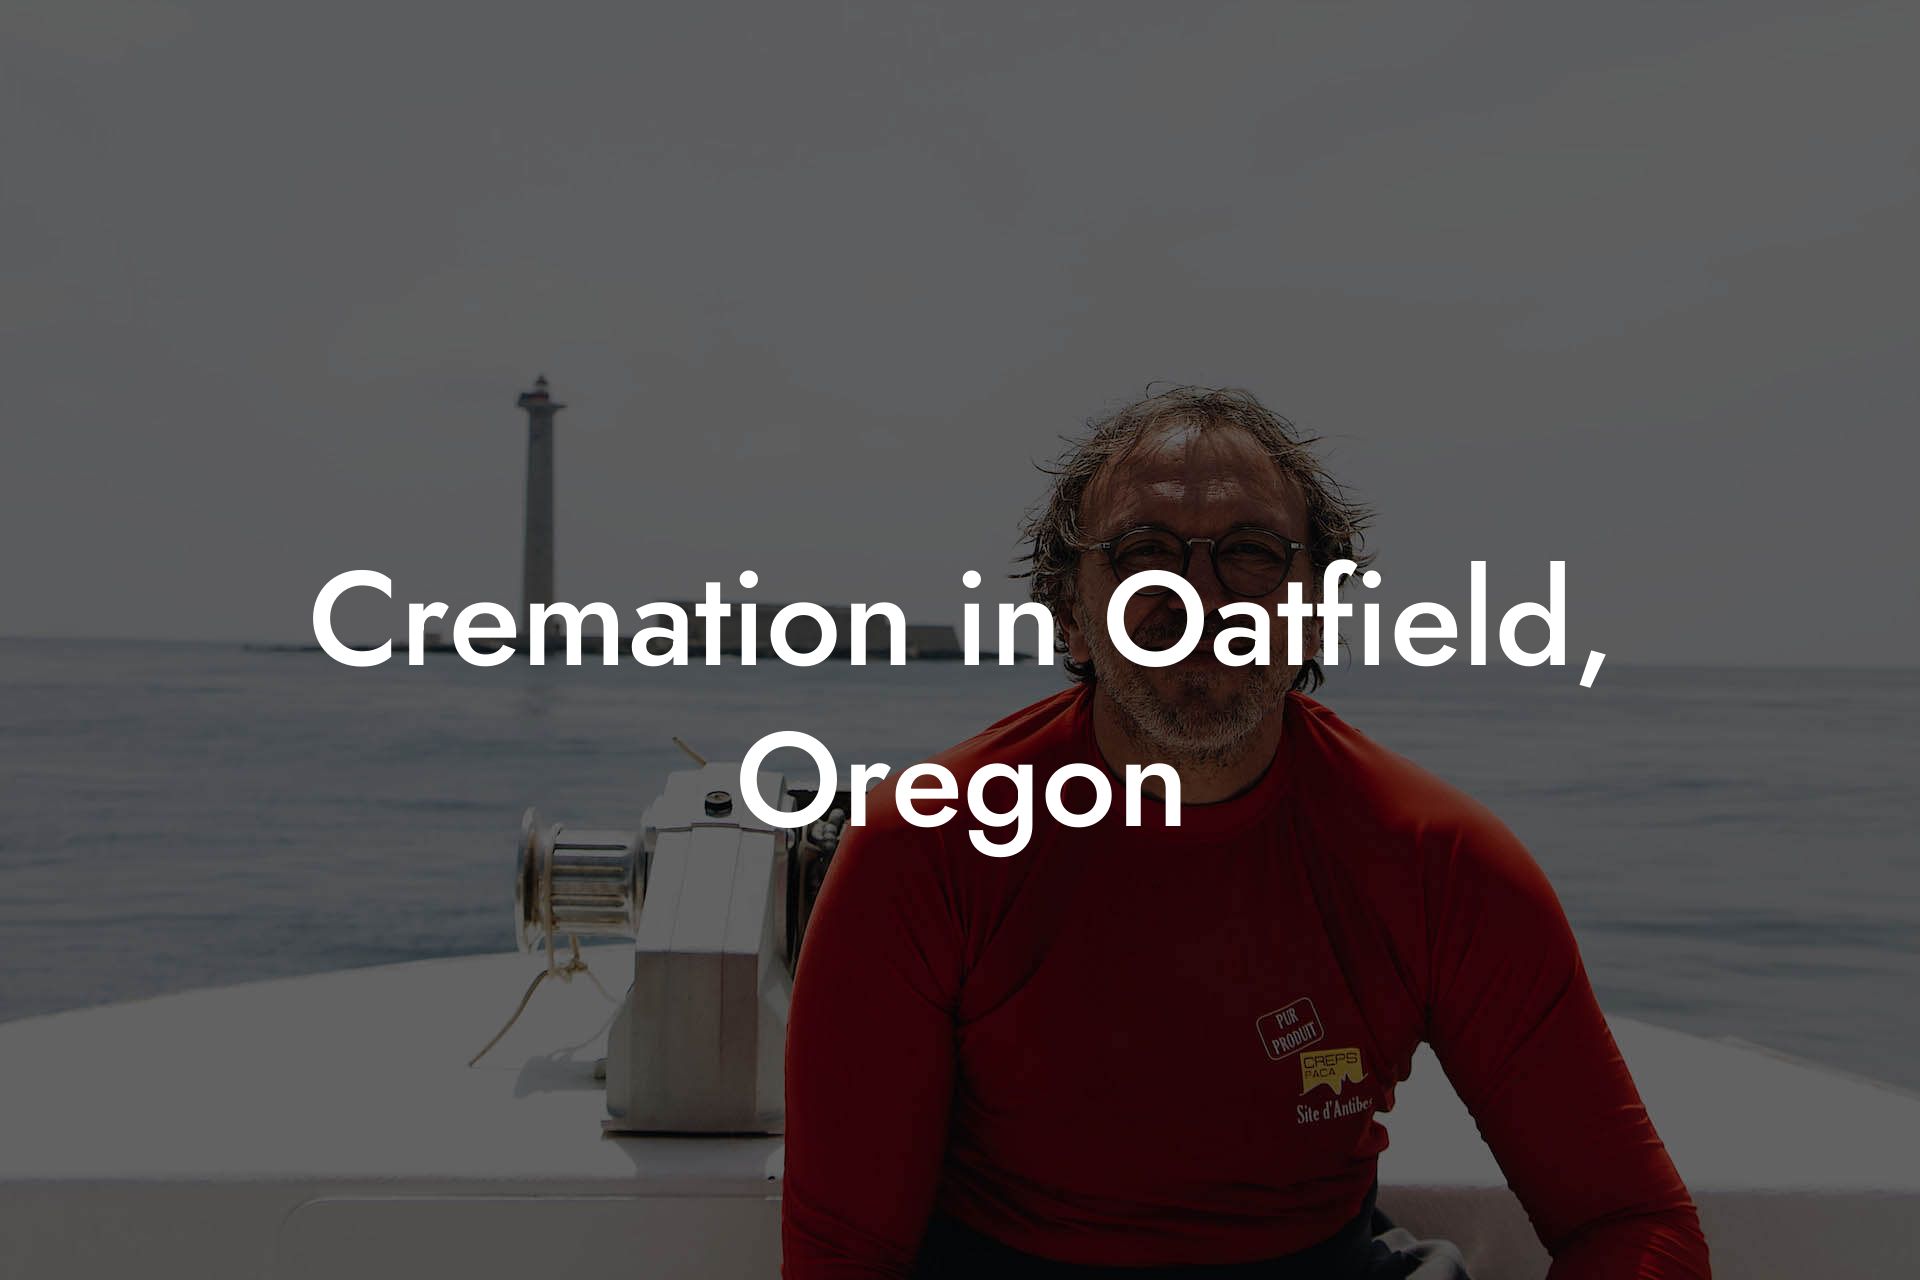 Cremation in Oatfield, Oregon